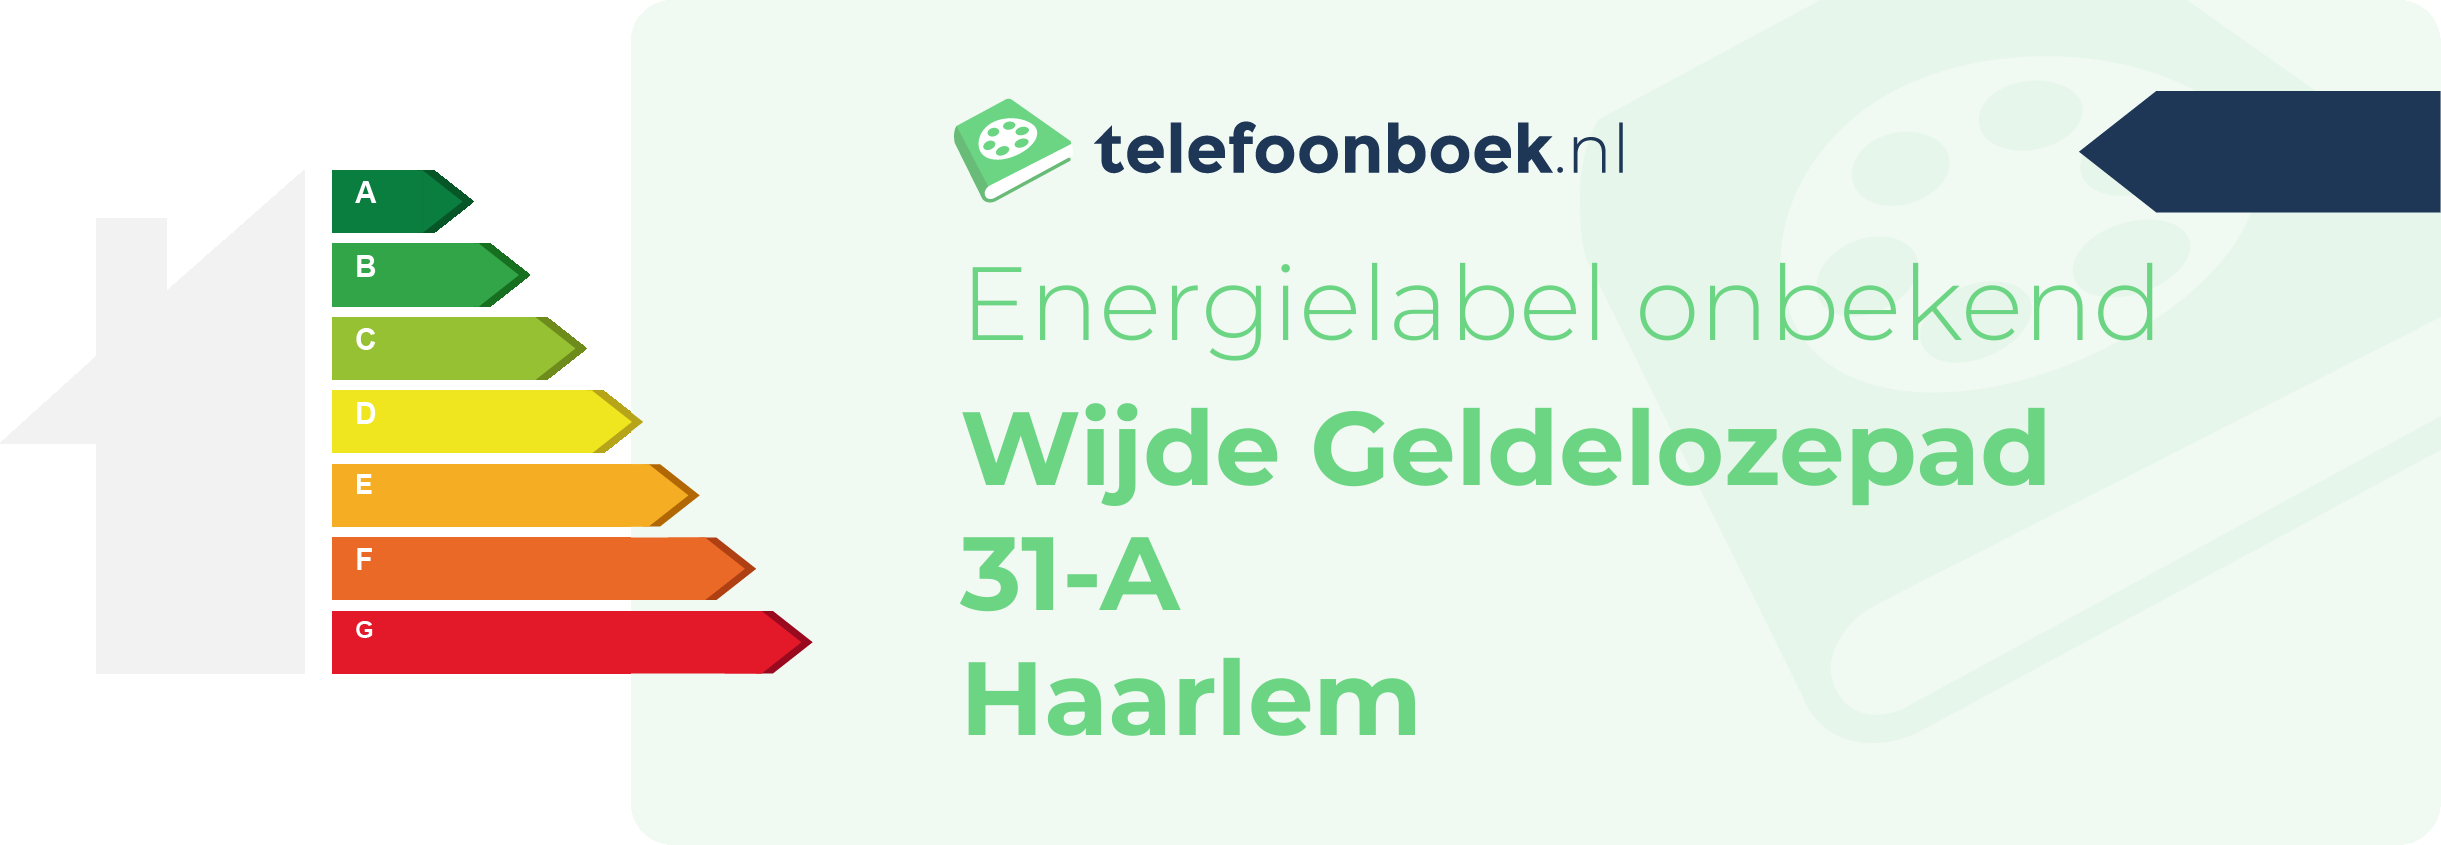 Energielabel Wijde Geldelozepad 31-A Haarlem